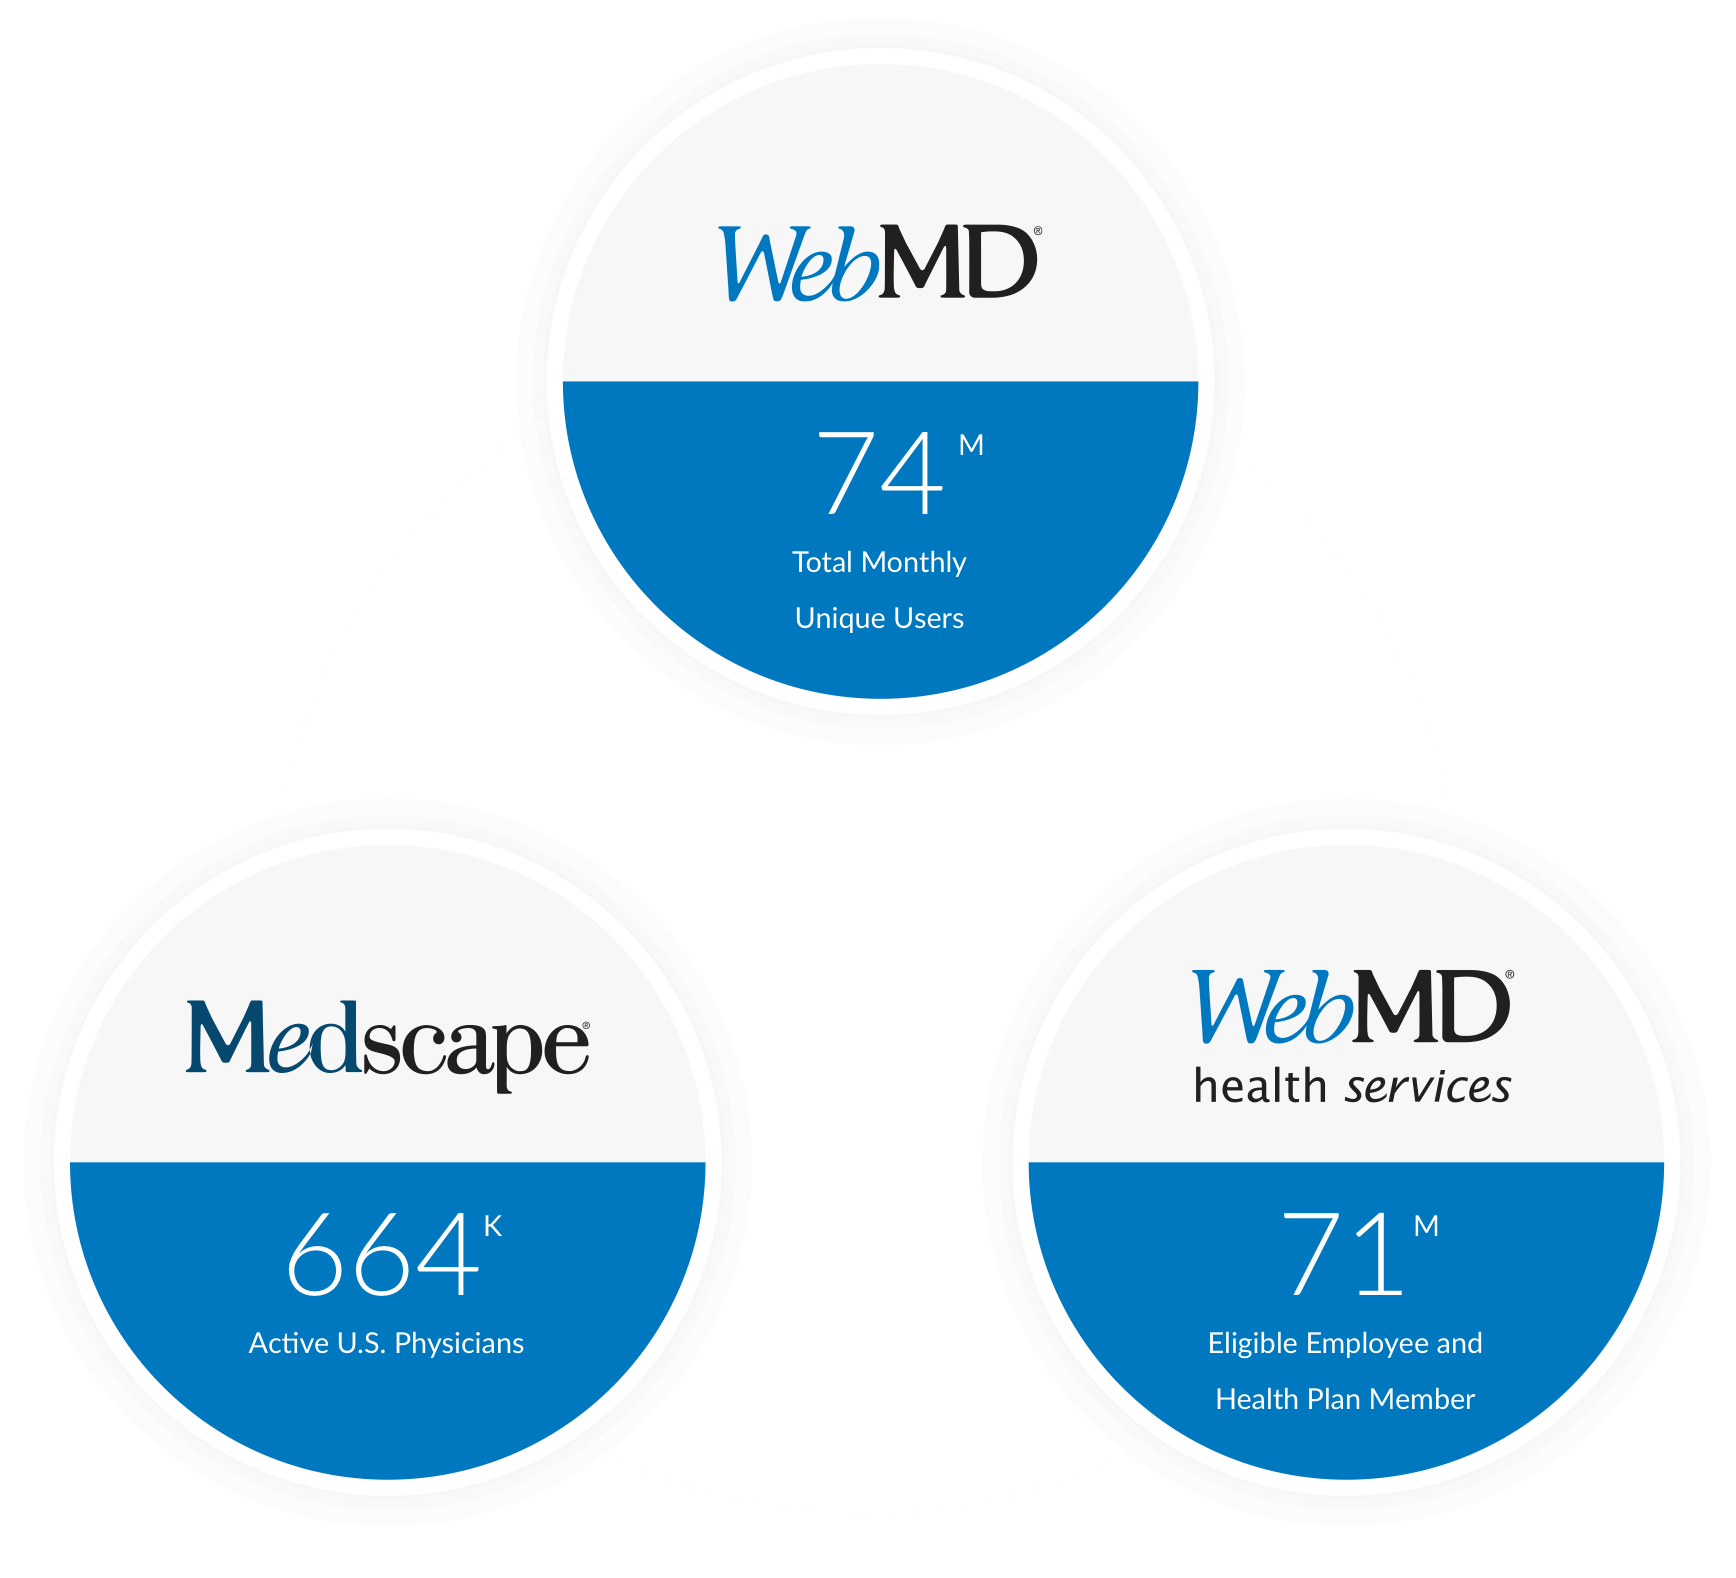 Webmd.com Logo - About Us Health Services